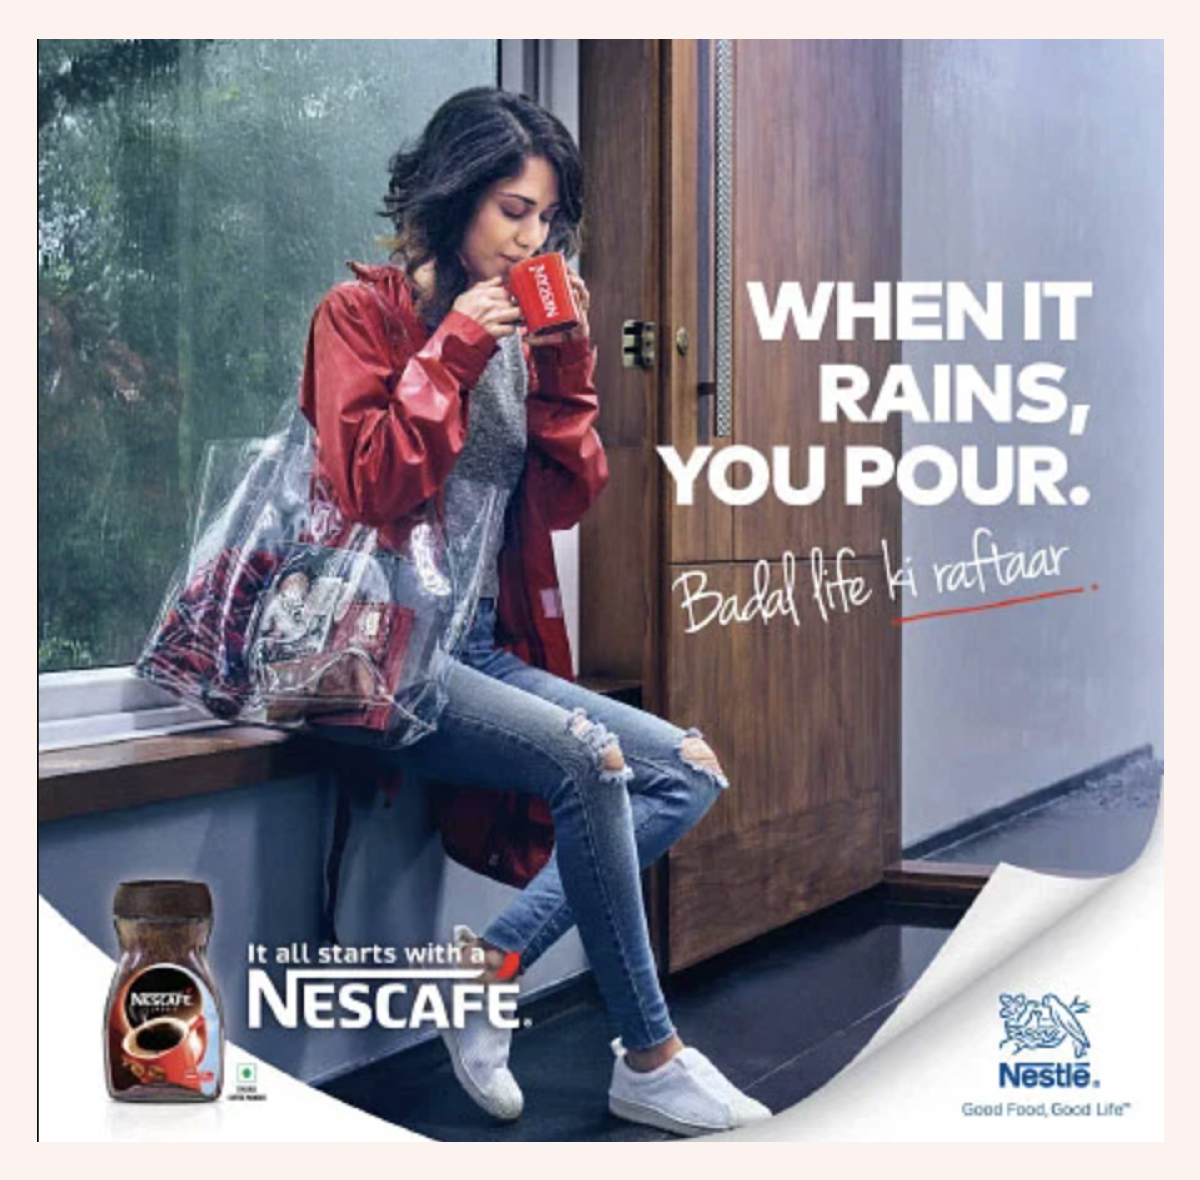 Nescafe creating a campaign around Mumbai Monsoons